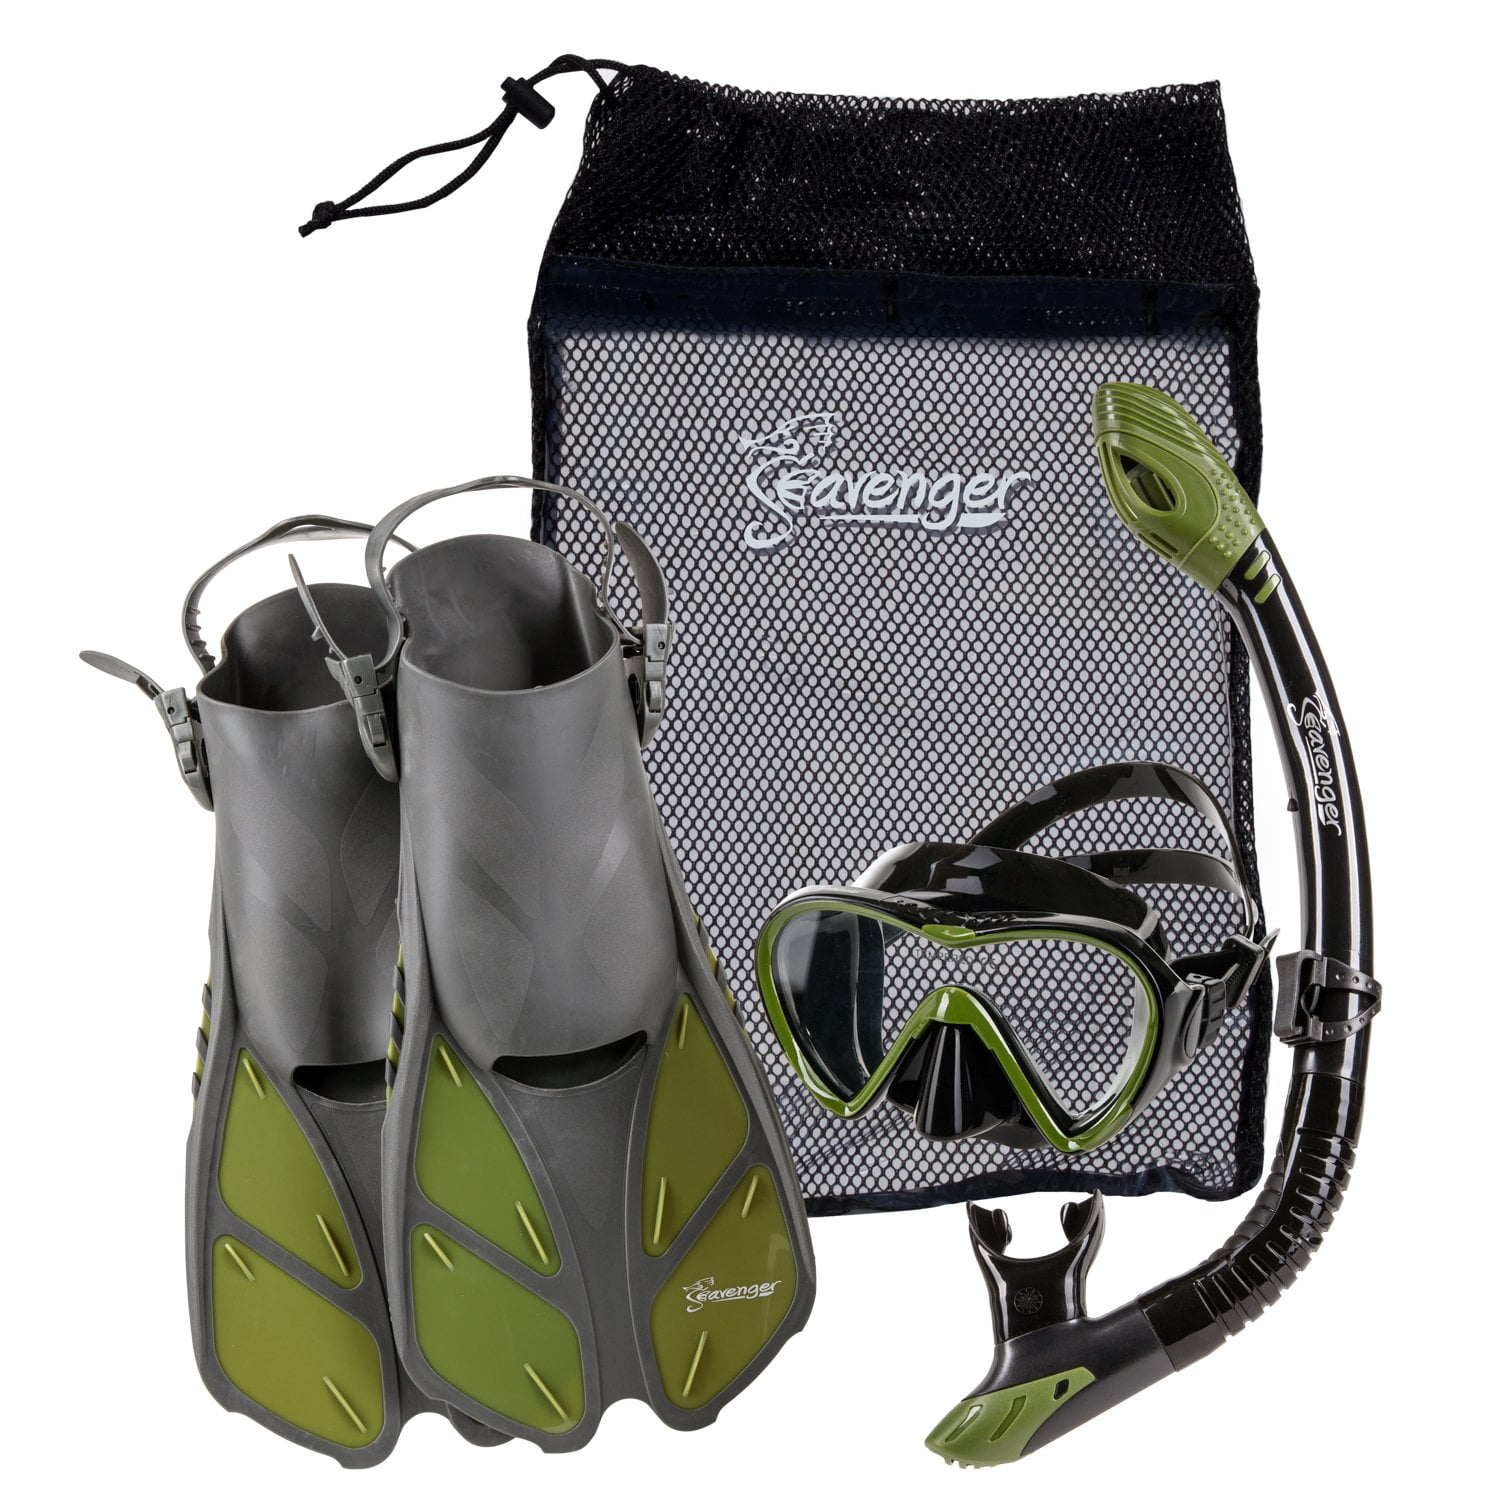 Seavenger Aviator Diving Kit/Snorkeling Set | Kids and Adults (Black Silicone/Green, L/XL)